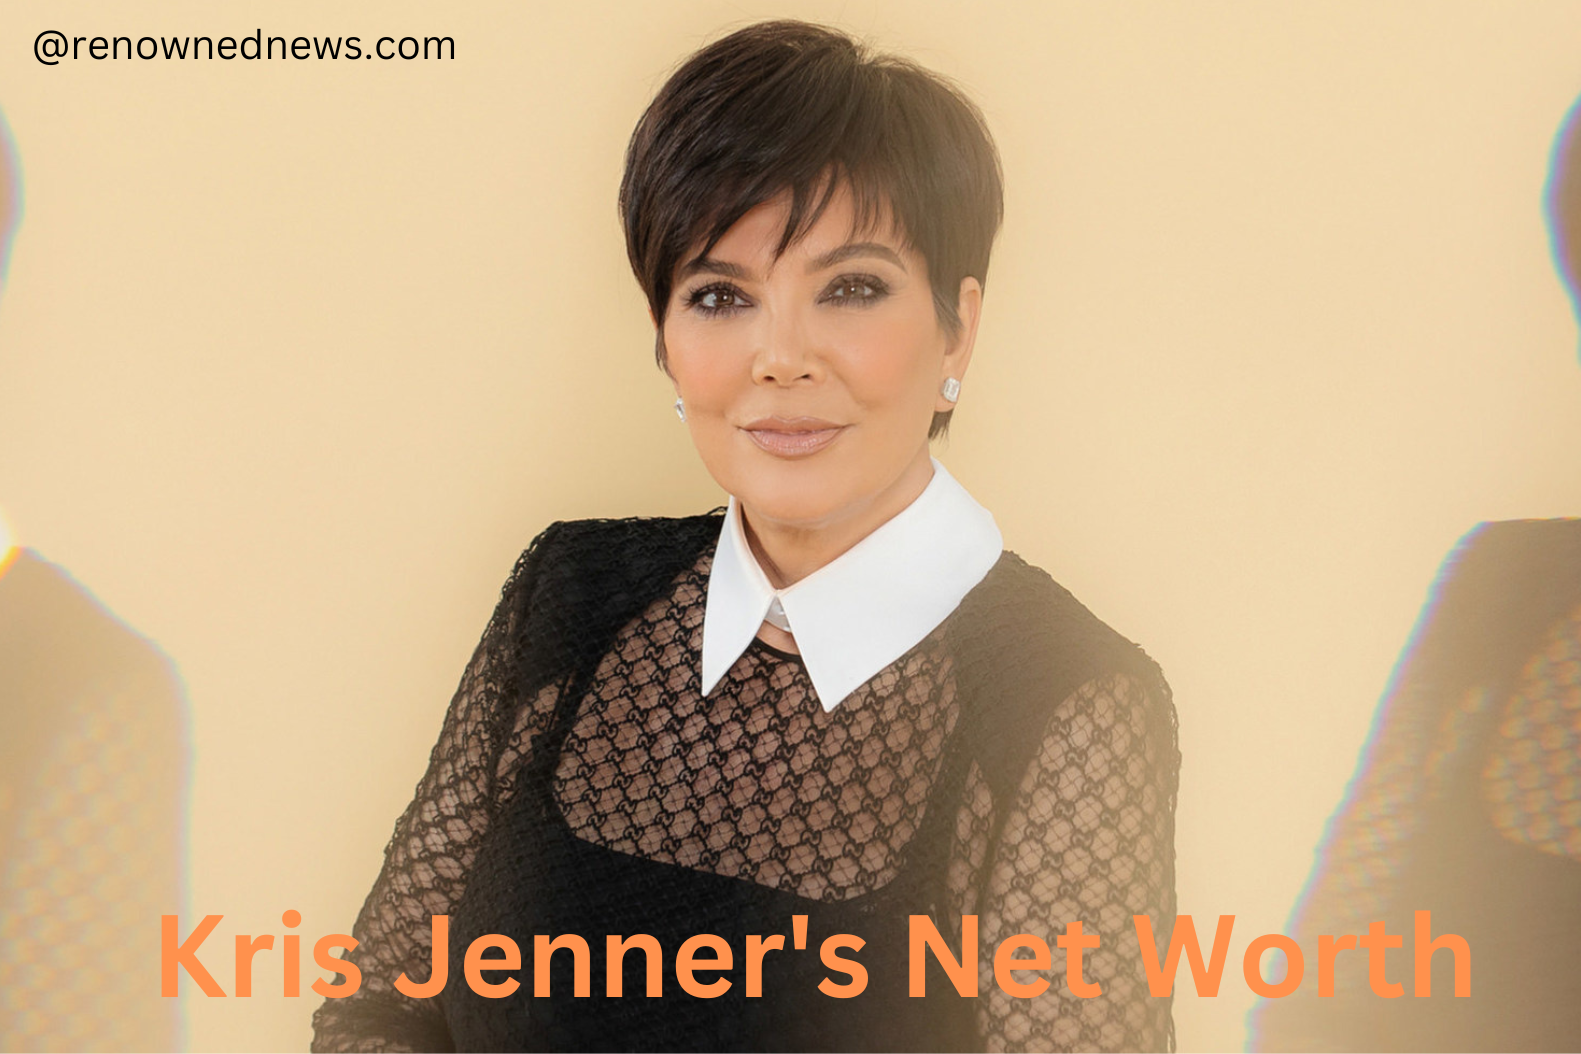 Kris Jenner's Net Worth